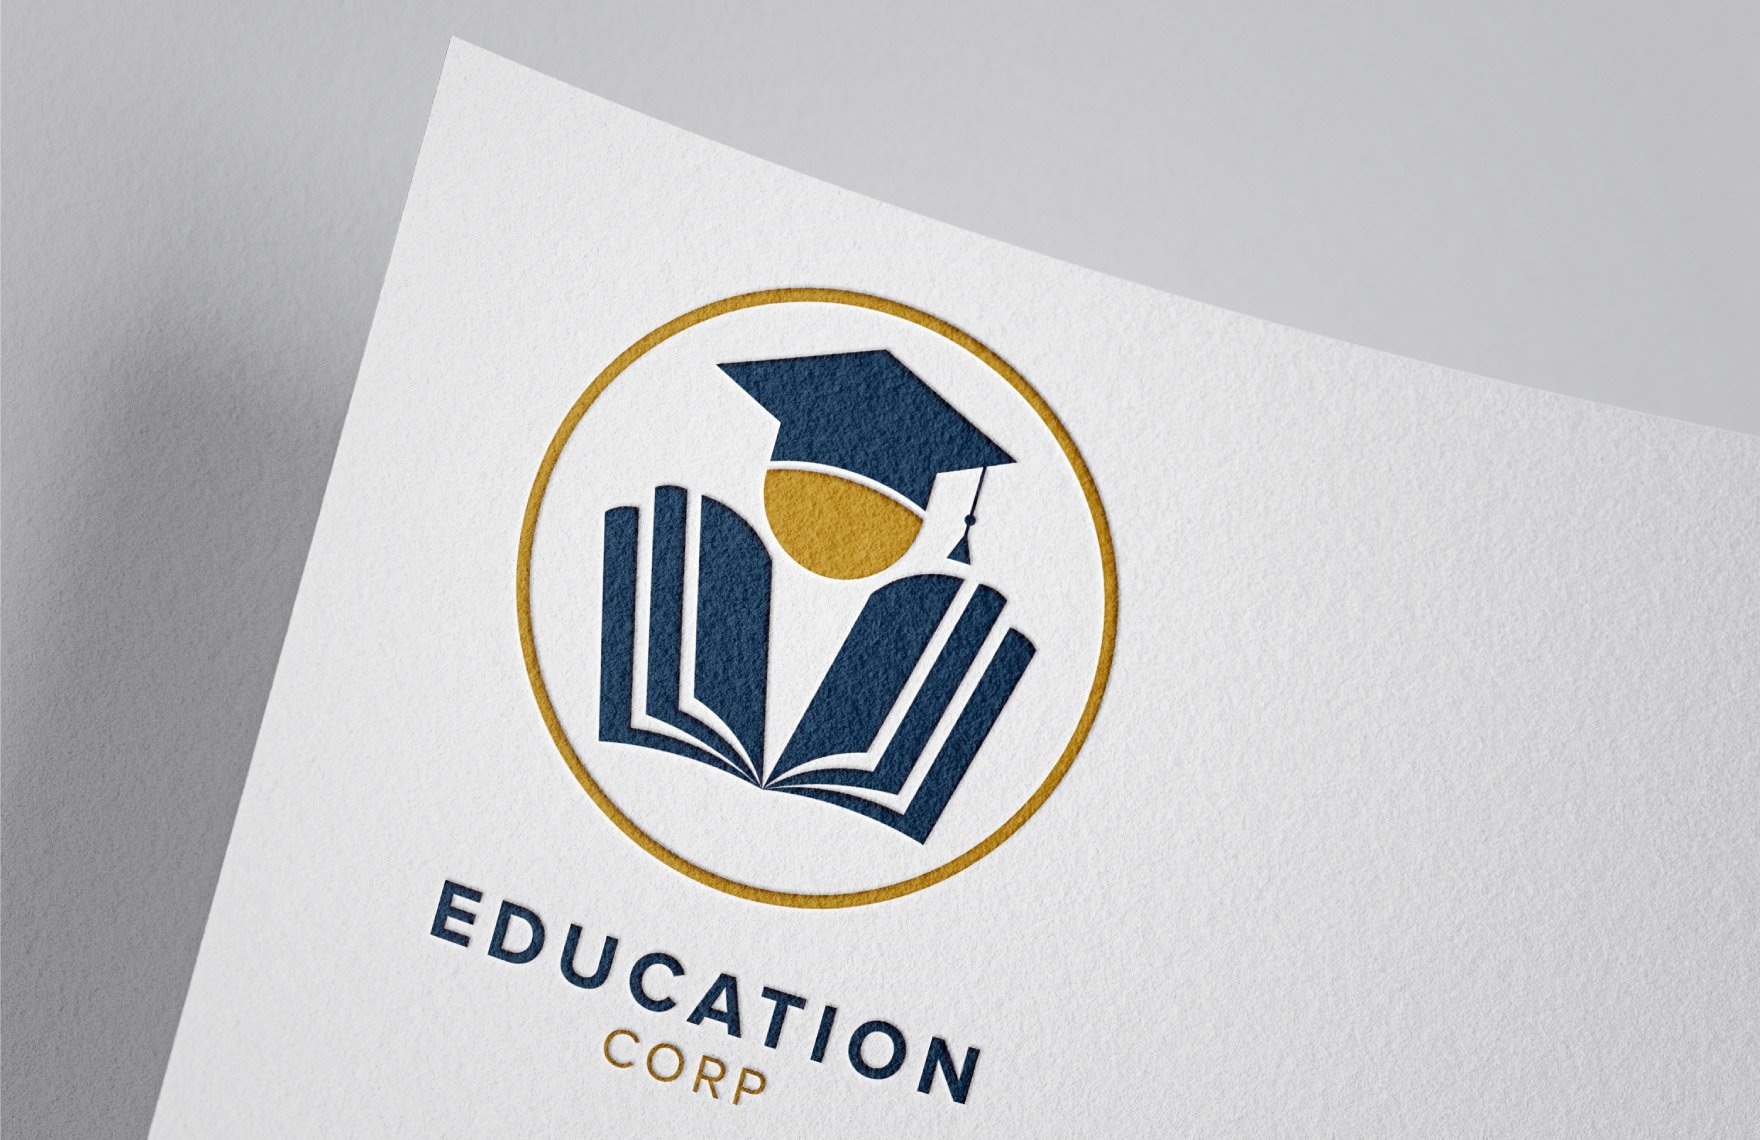 Tertiary Education Logo Template